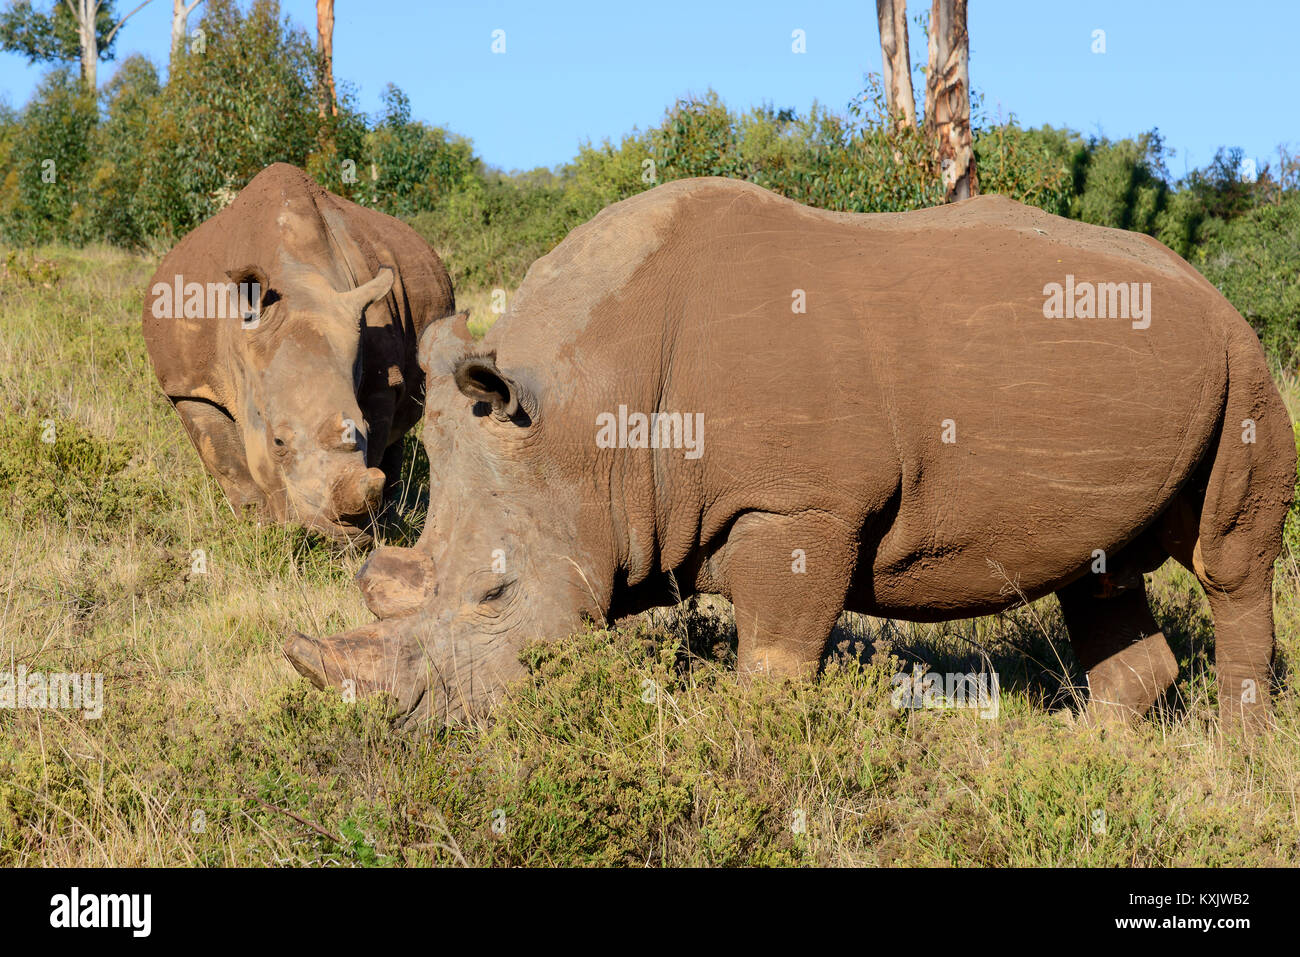 Rhinocéros blanc, Ceratotherium simum, Afrique du Sud, Safaris Porth Elizabeth, Schotia Private Game Reserve park Banque D'Images